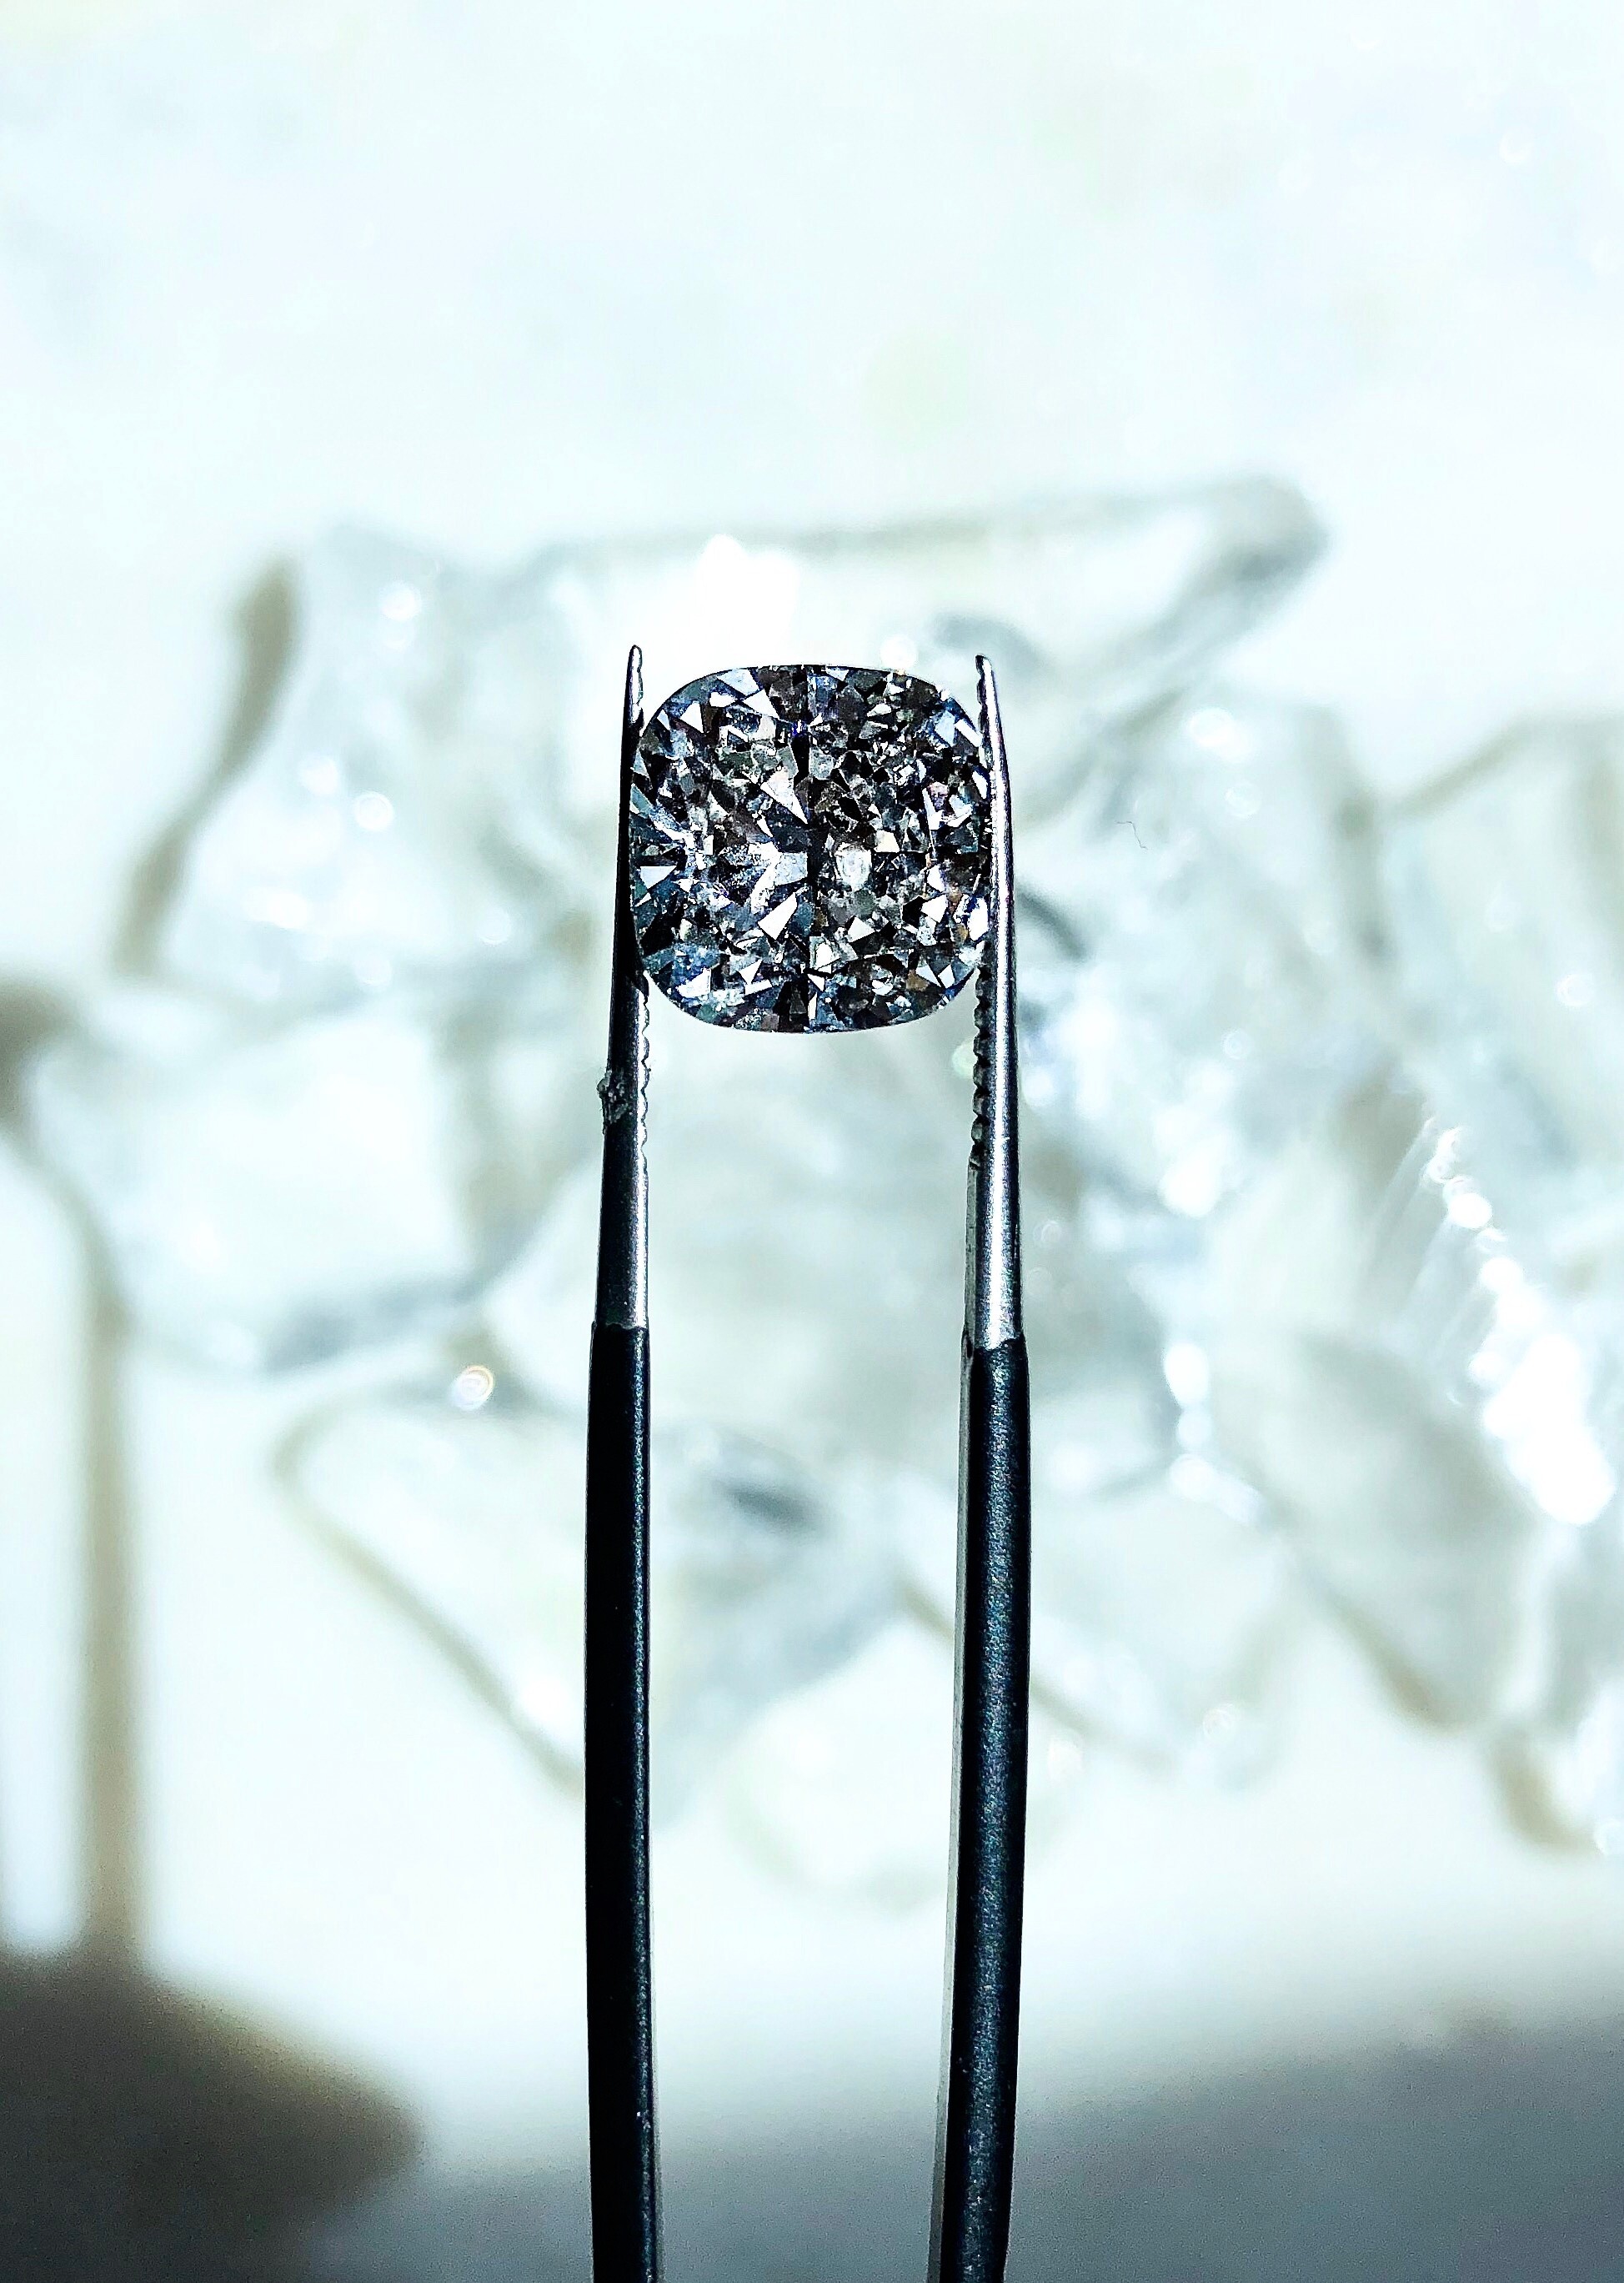 A lab-grown diamond. Photo: Shutterstock